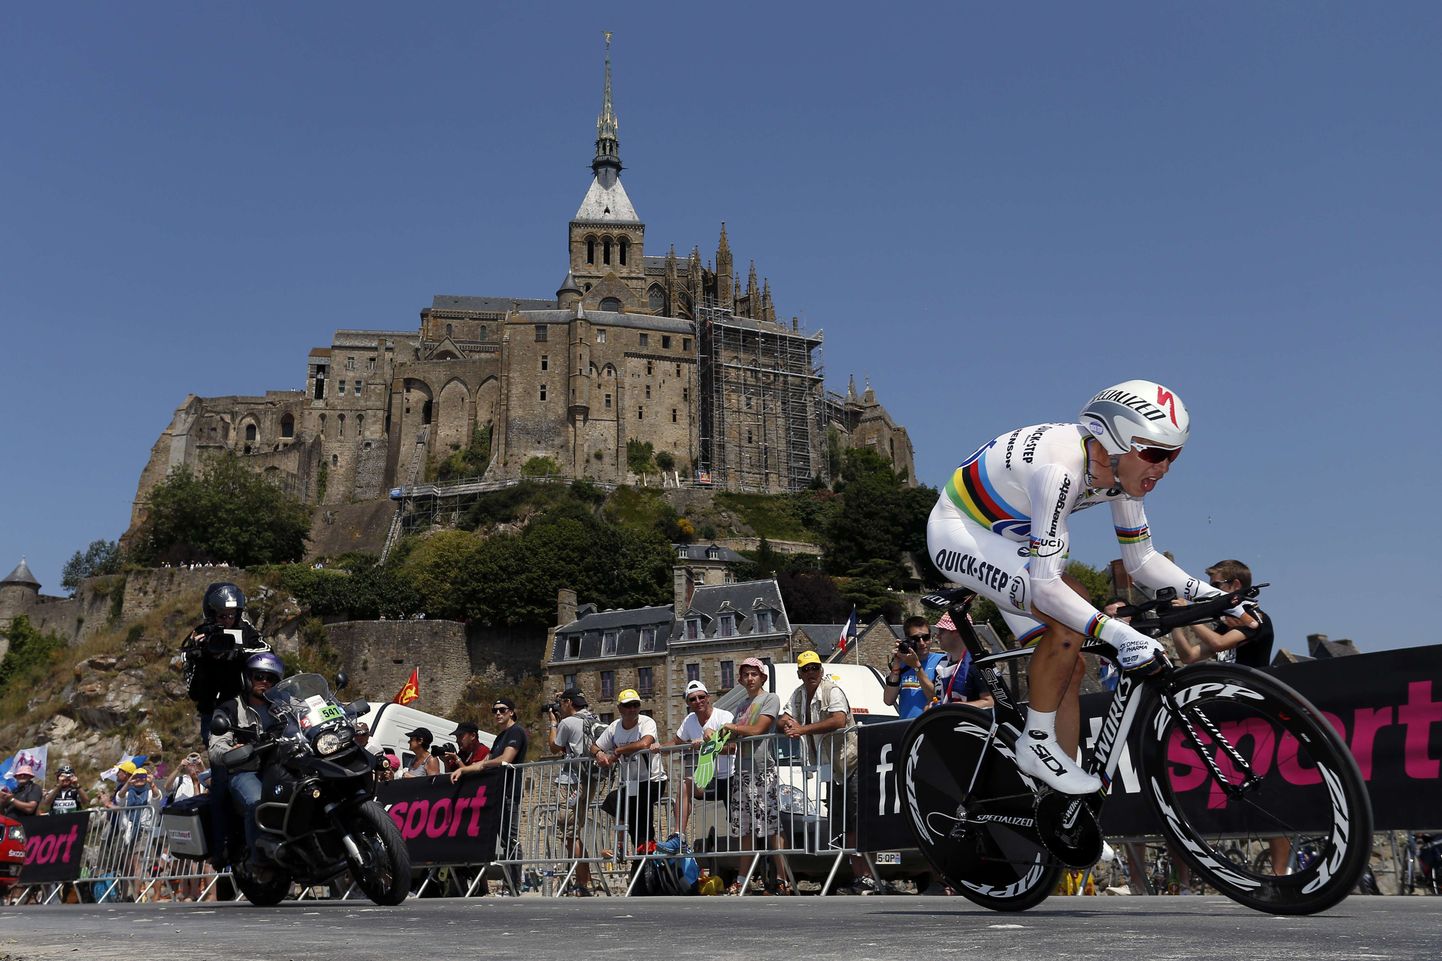 Tour de France'i trass läbis Manche'i ka 2013. aastal. Pildil Tony Martin individuaalse temposõidu etapil.